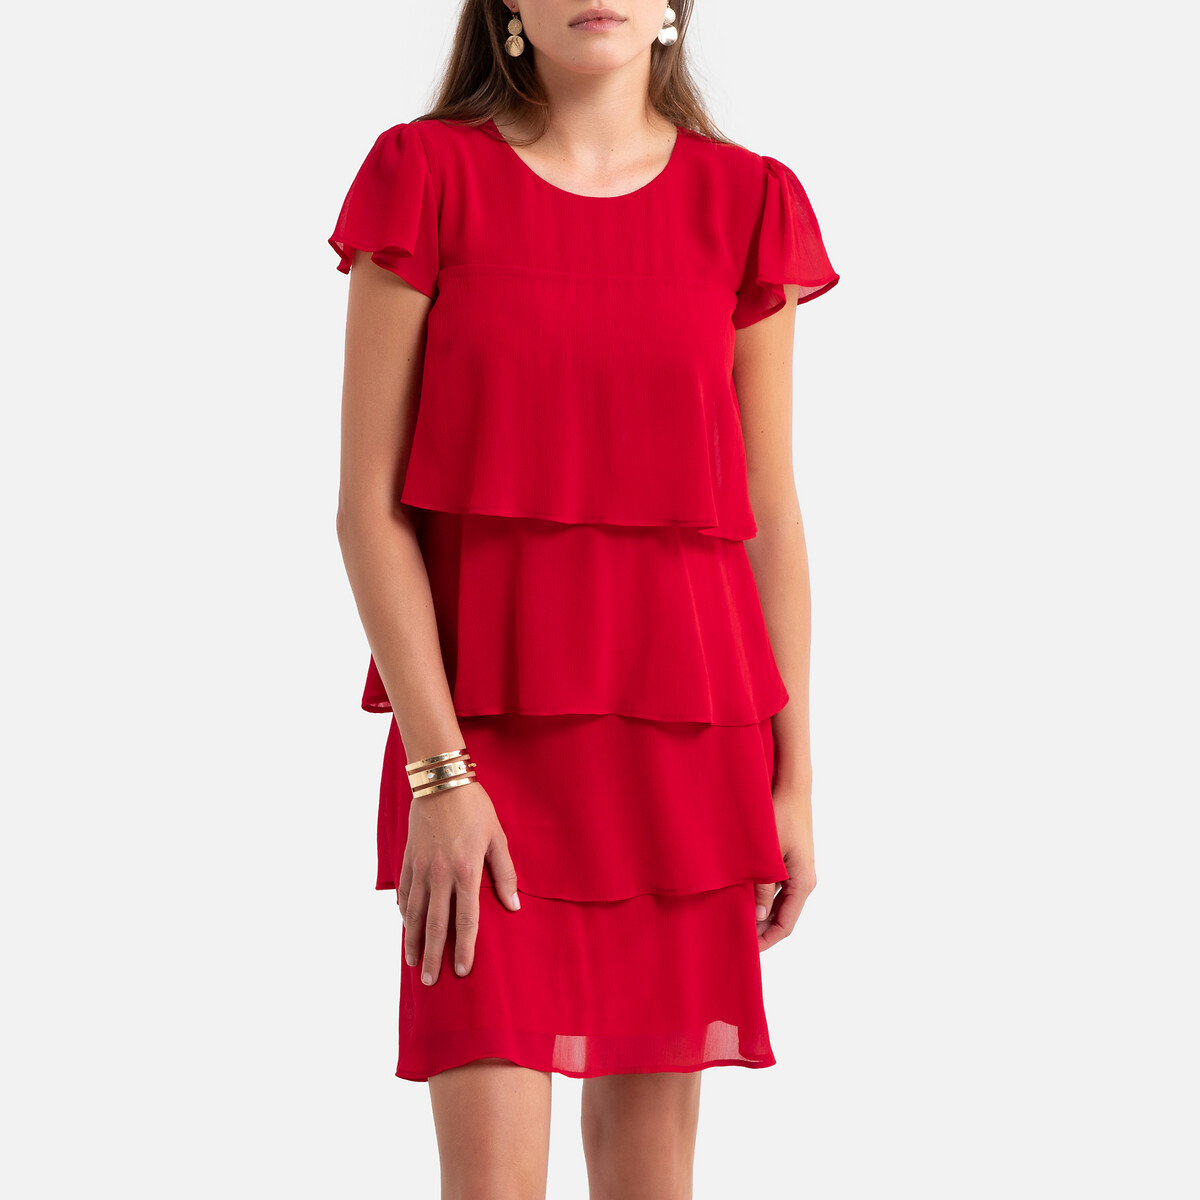 Платье La Redoute С воланом из жатого крепа 38 (FR) - 44 (RUS) красный, размер 38 (FR) - 44 (RUS) С воланом из жатого крепа 38 (FR) - 44 (RUS) красный - фото 1